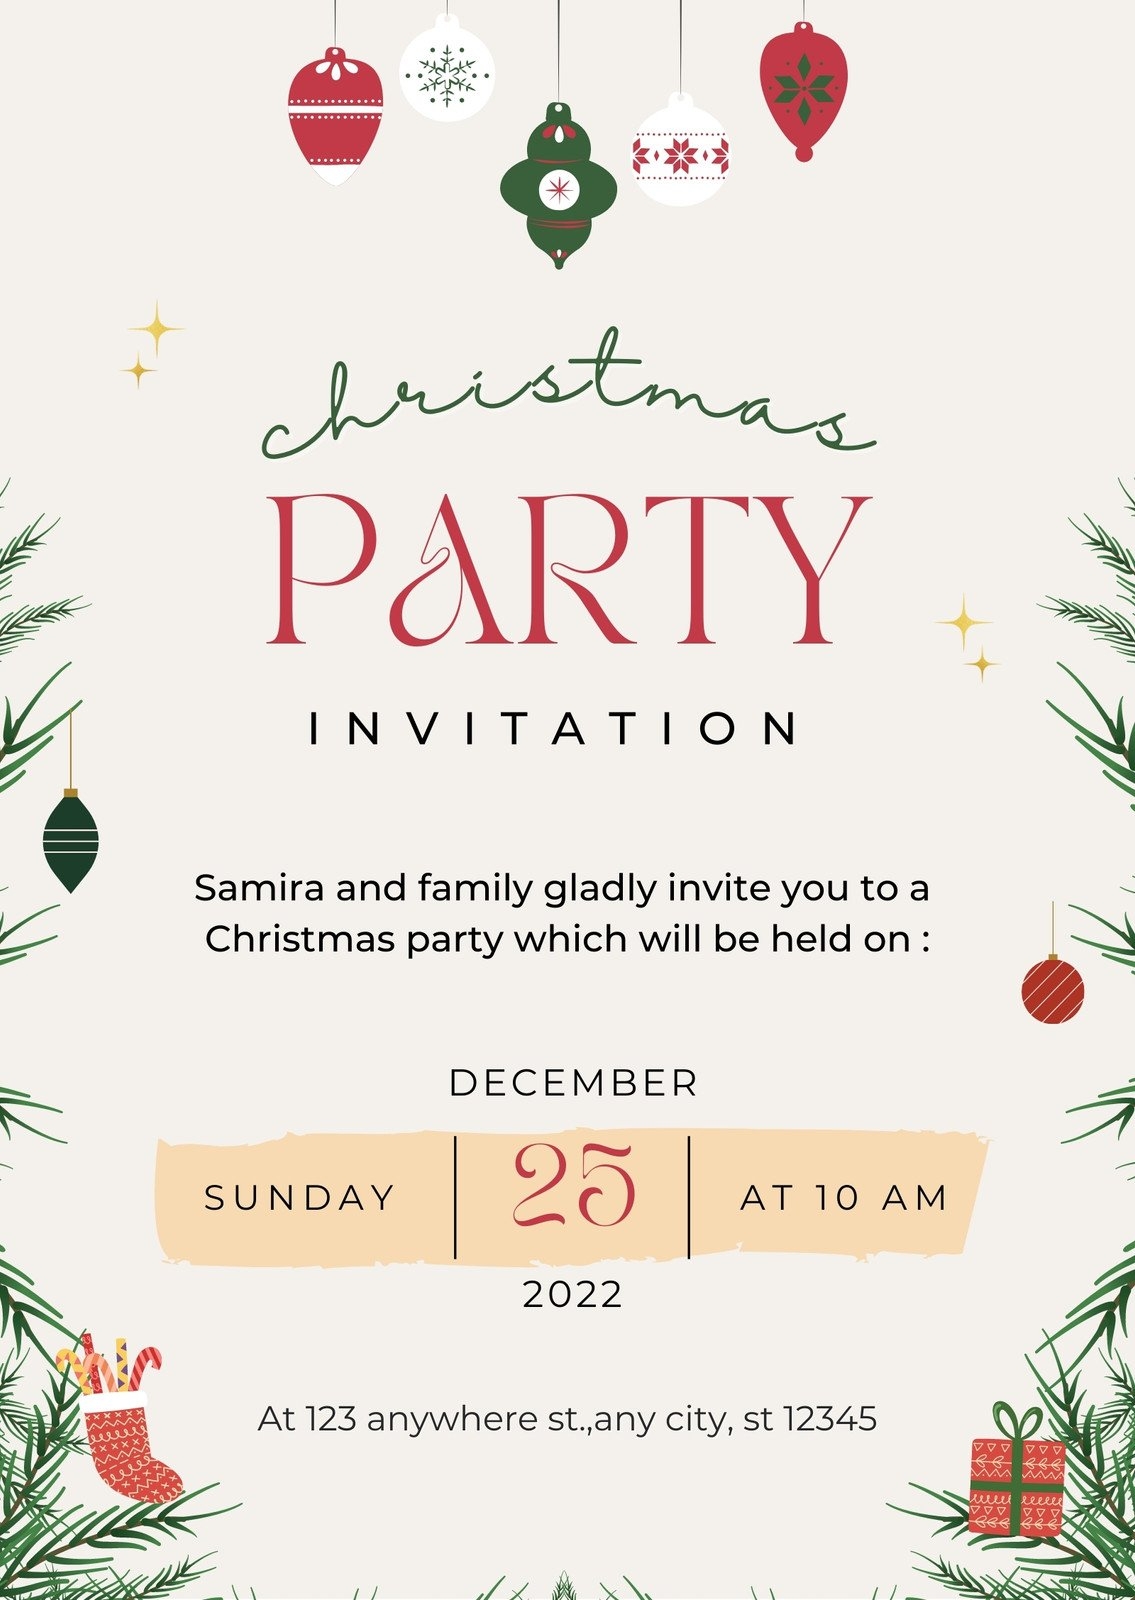 Free Printable Christmas Invitations - Free Printable Christmas Invitations